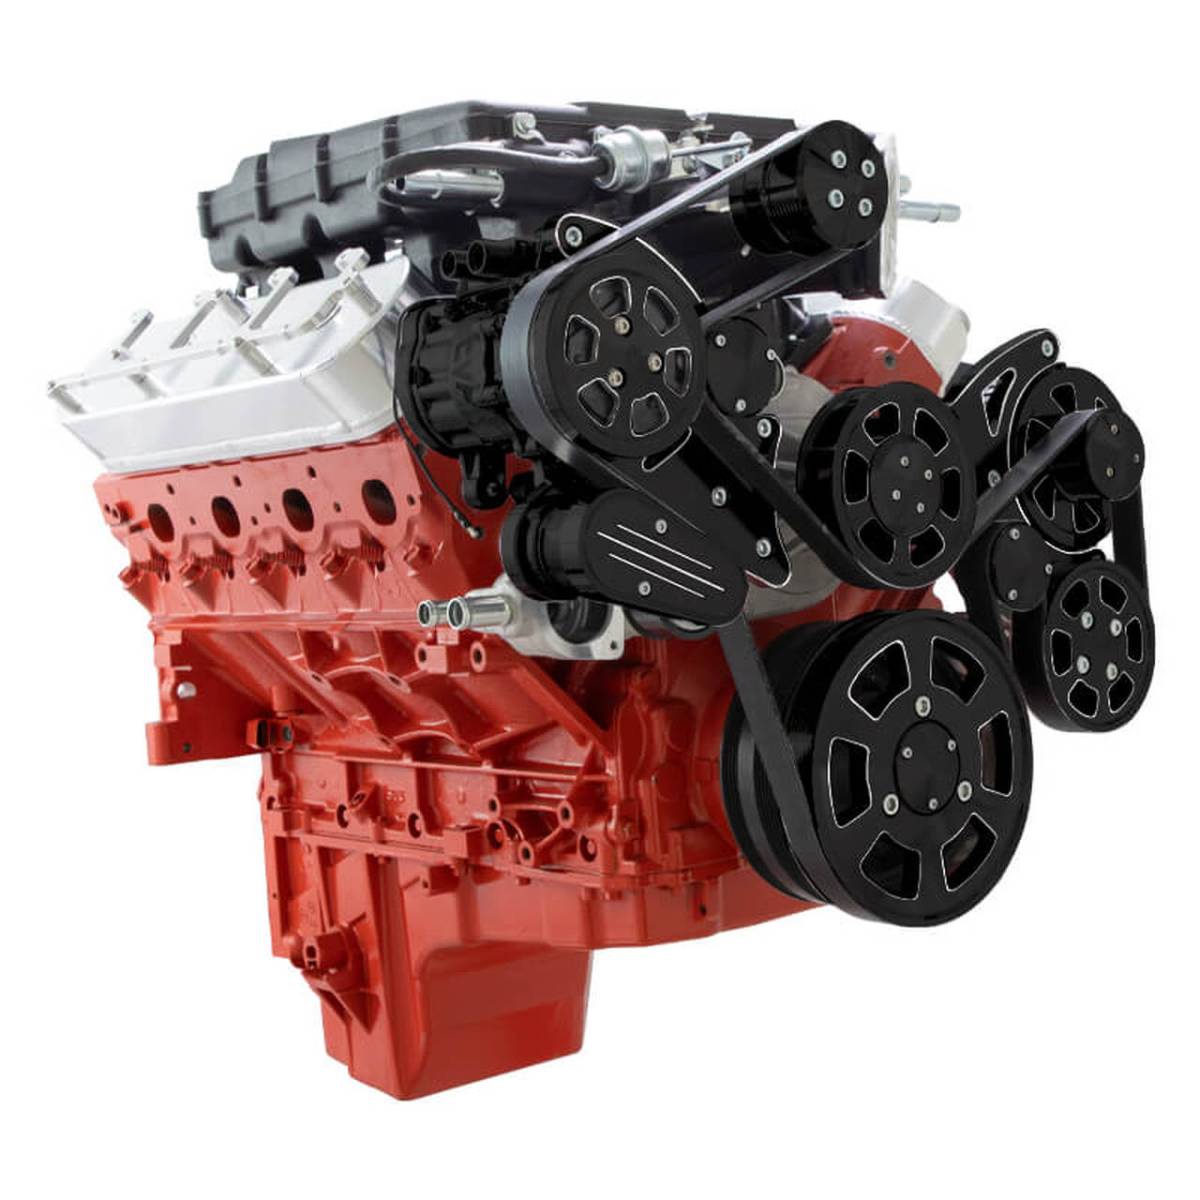 CVF Racing - CVF Wraptor Chevy LS Engine Magnuson Serpentine Bracket System with Alternator & AC - Black Diamond Finish - Image 1